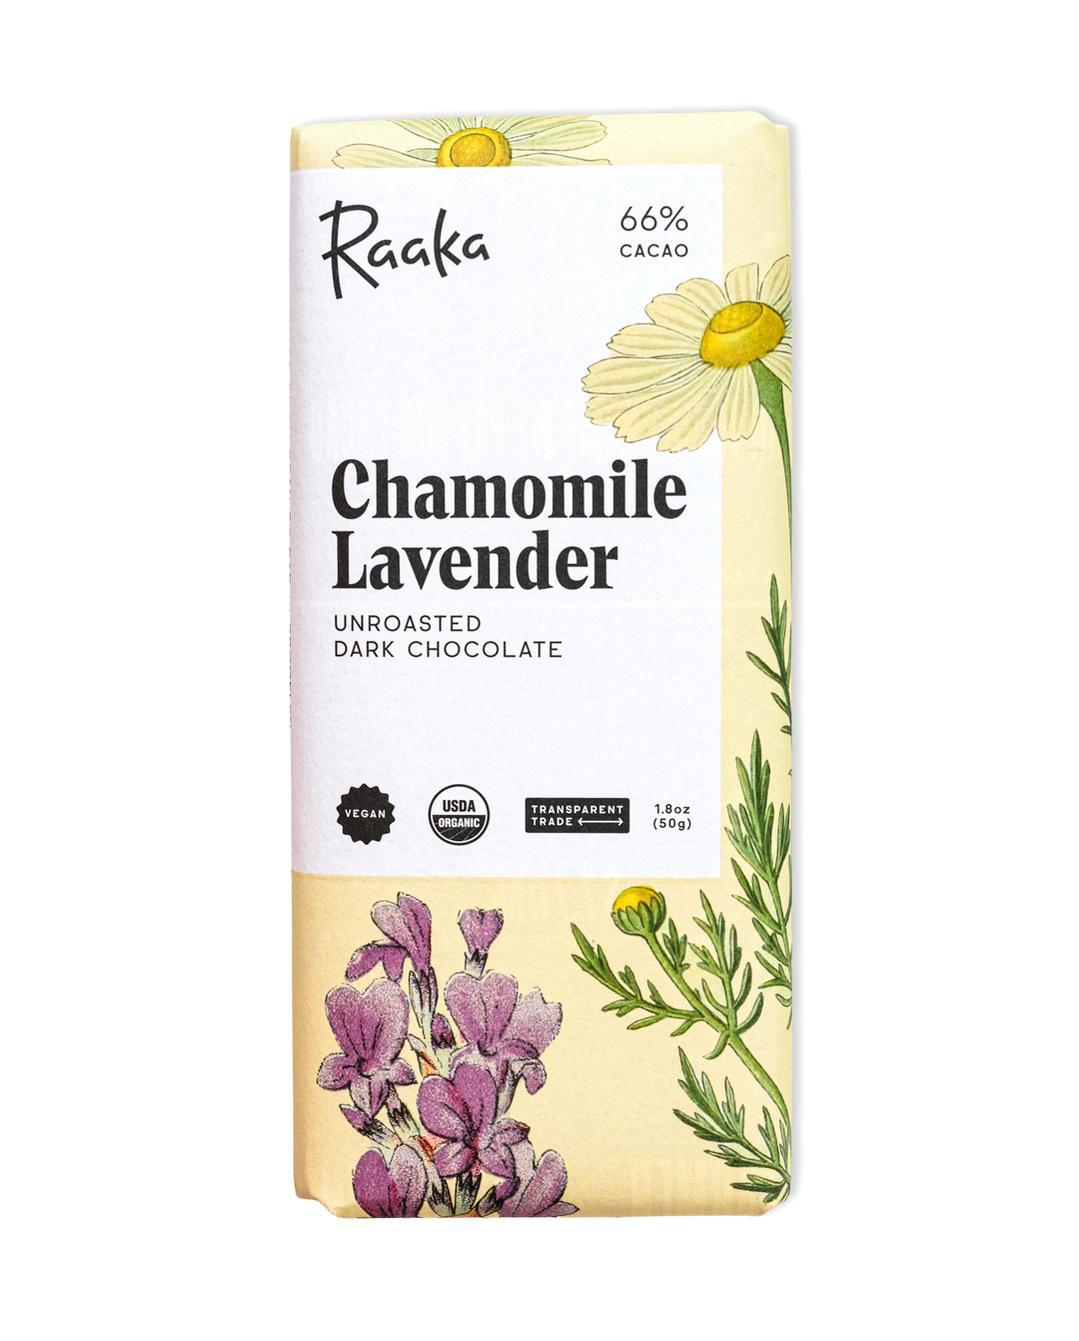 66% Chamomile Lavender Chocolate Bar - Raaka